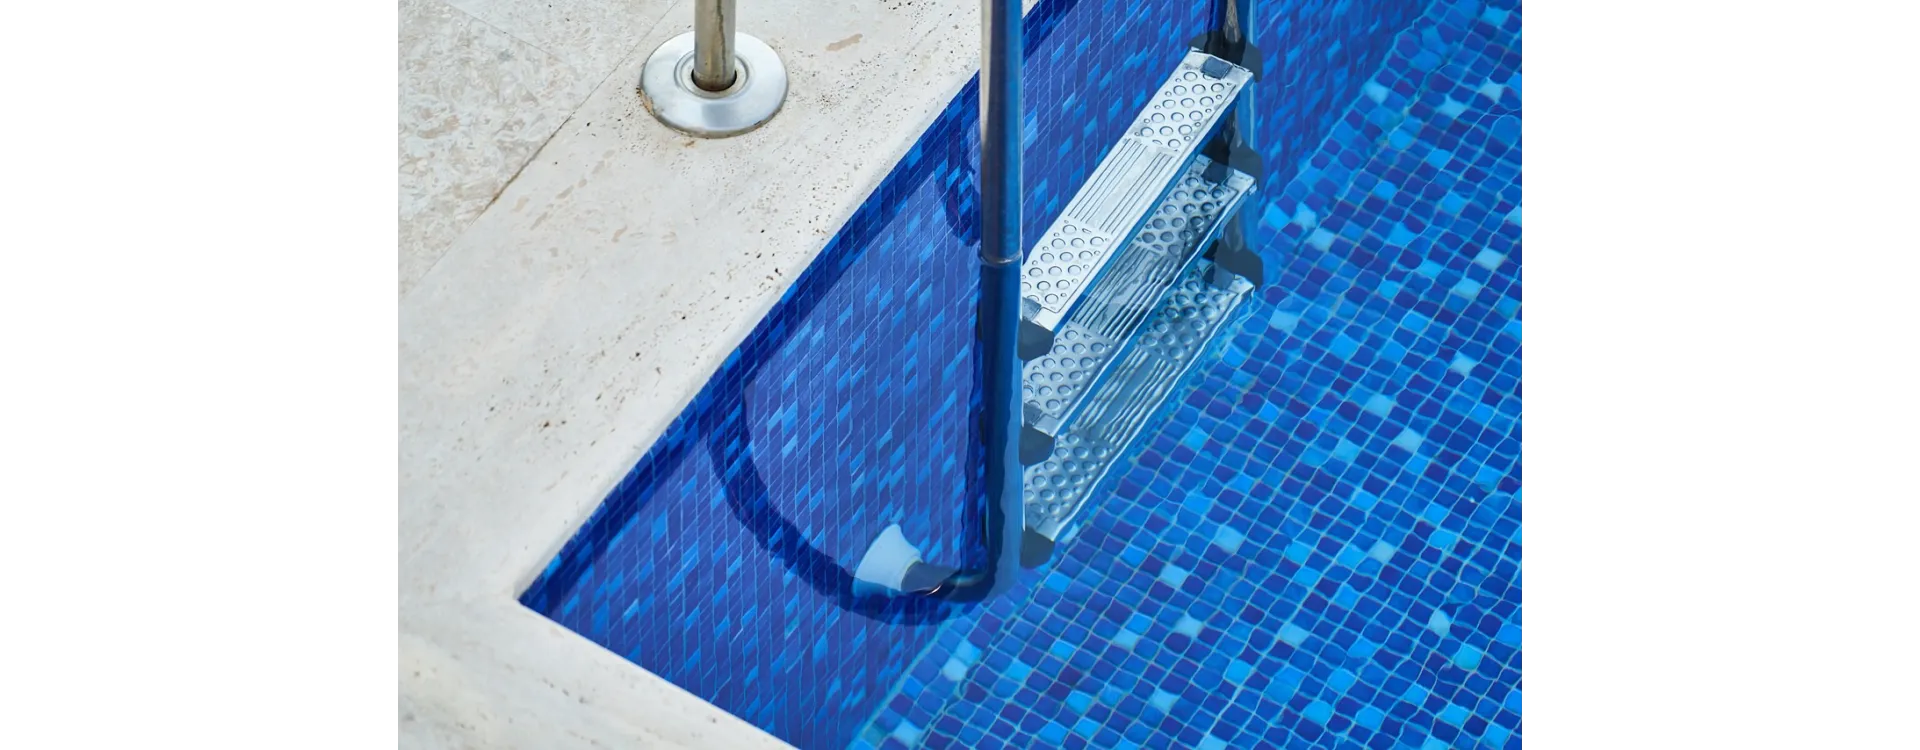 Tipos de escaleras para piscinas